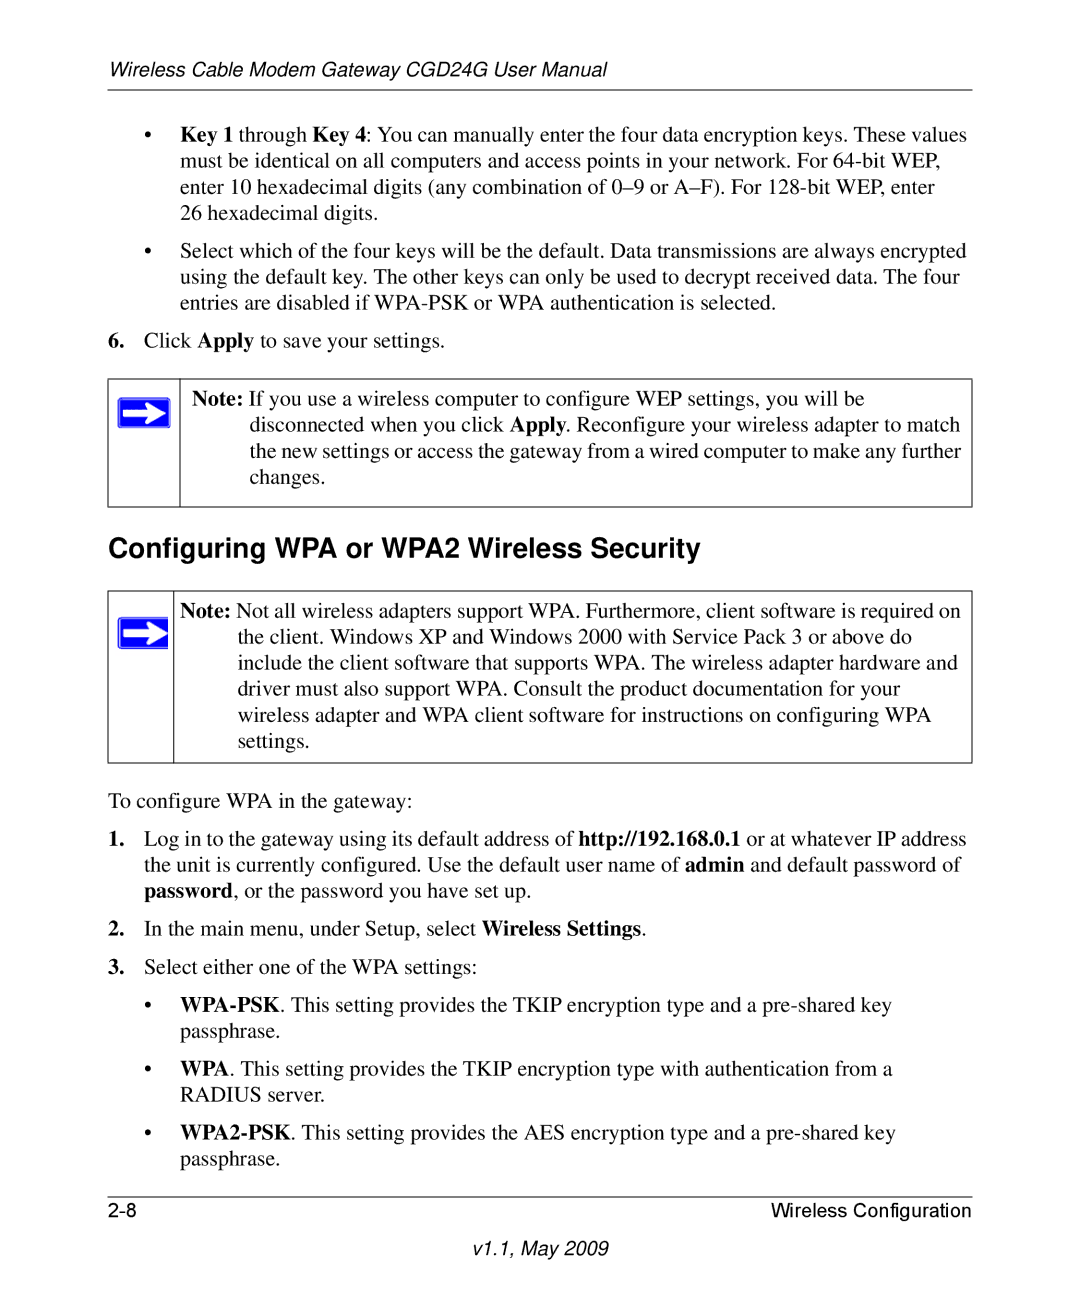 Gateway CGD24G user manual Configuring WPA or WPA2 Wireless Security 